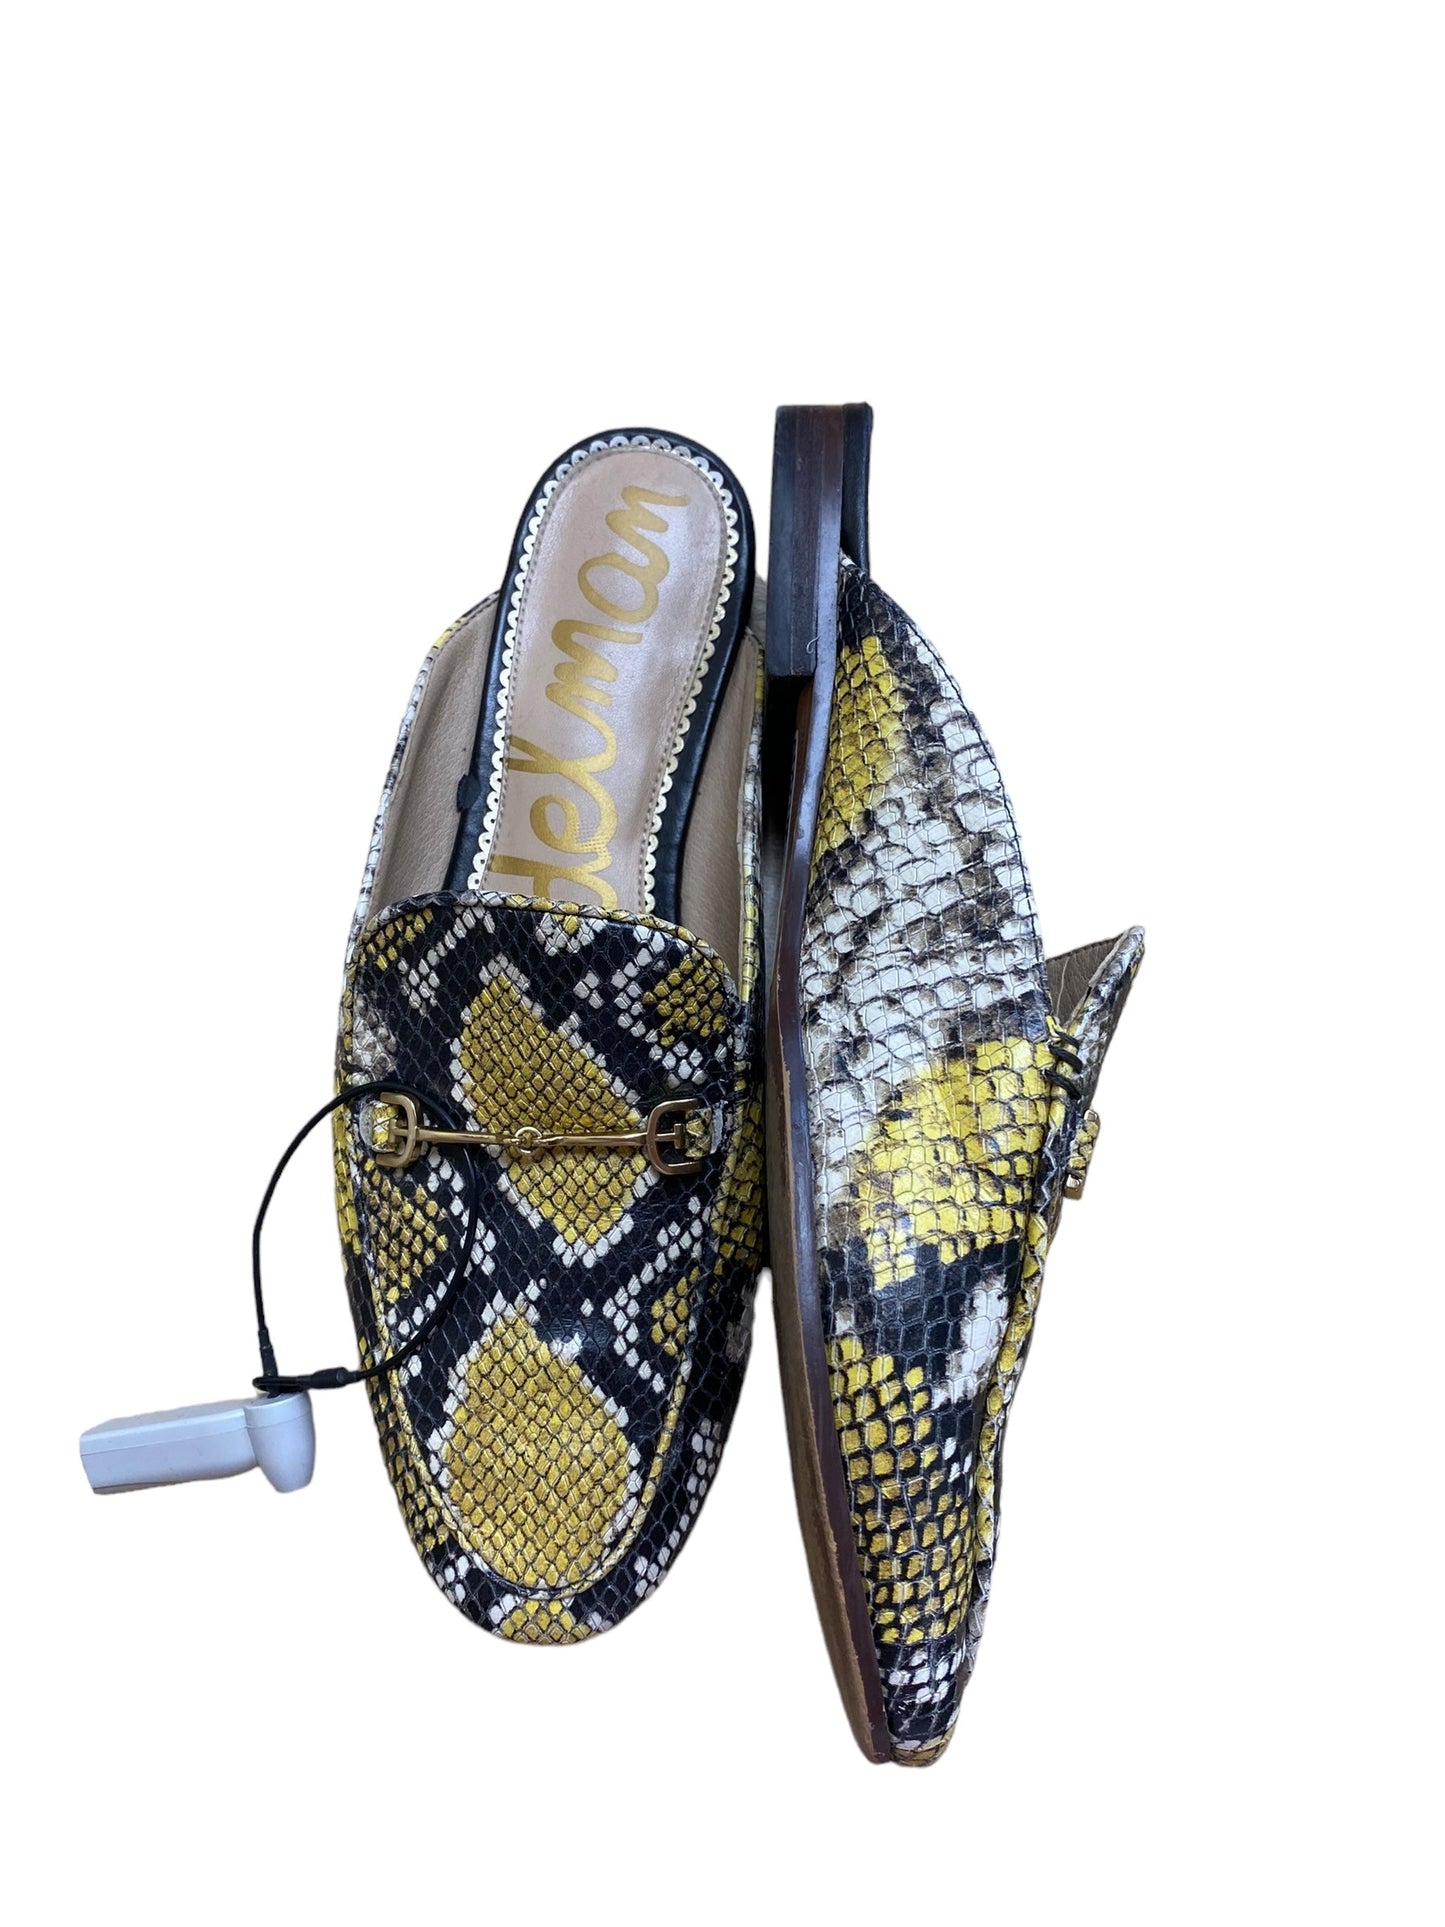 Snakeskin Print Shoes Flats Sam Edelman, Size 8.5